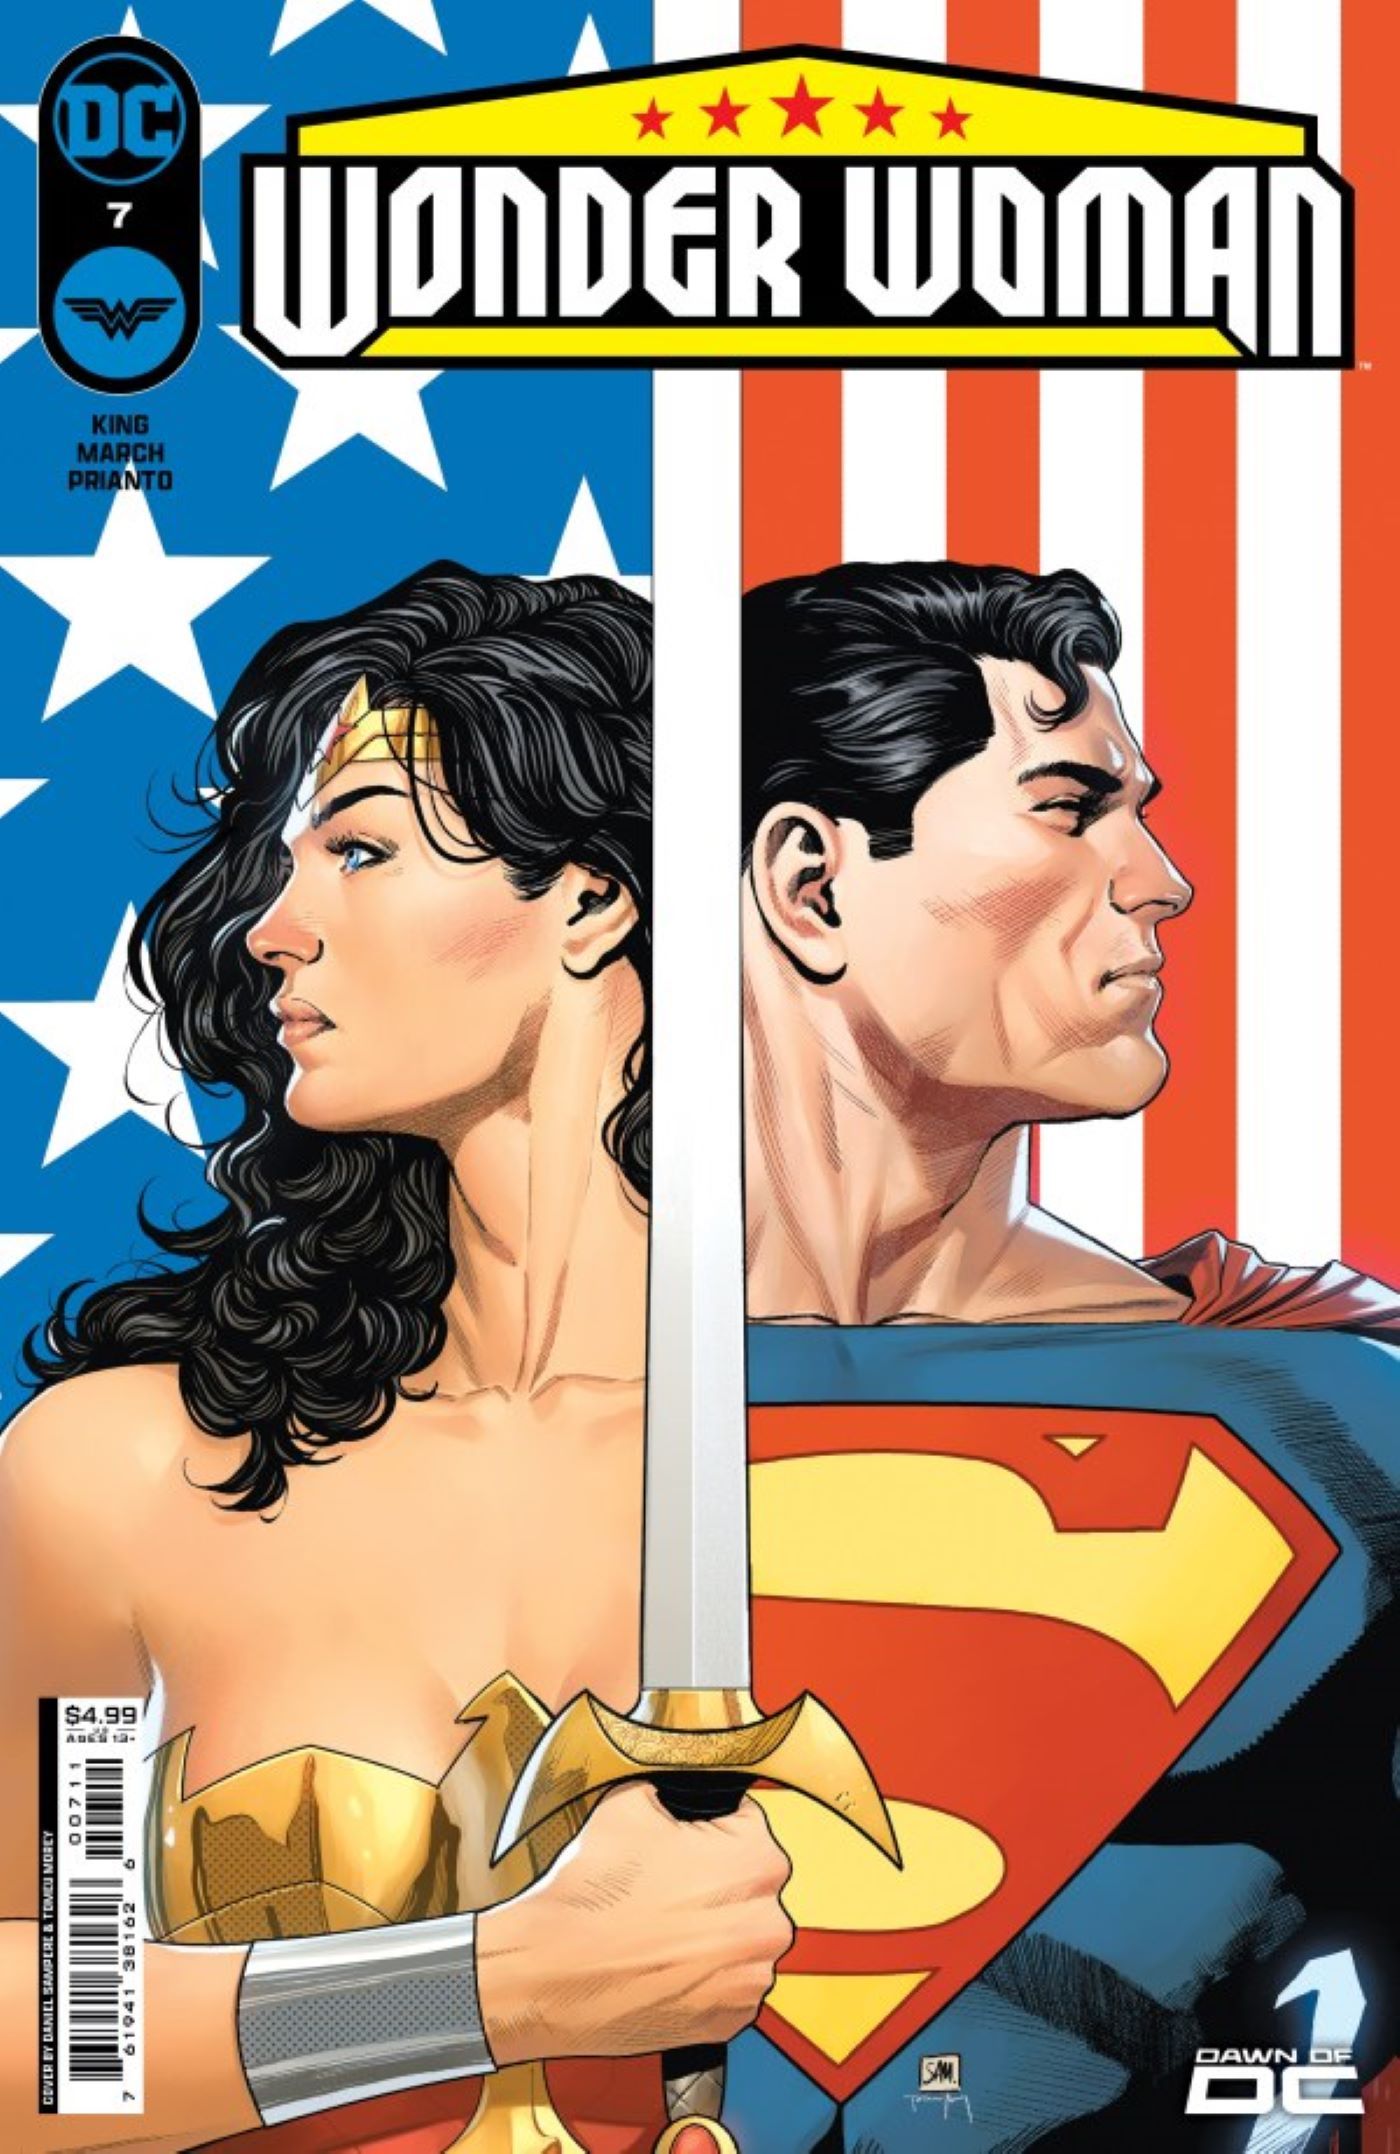 Mulher Maravilha #7 com Diana e Superman na capa